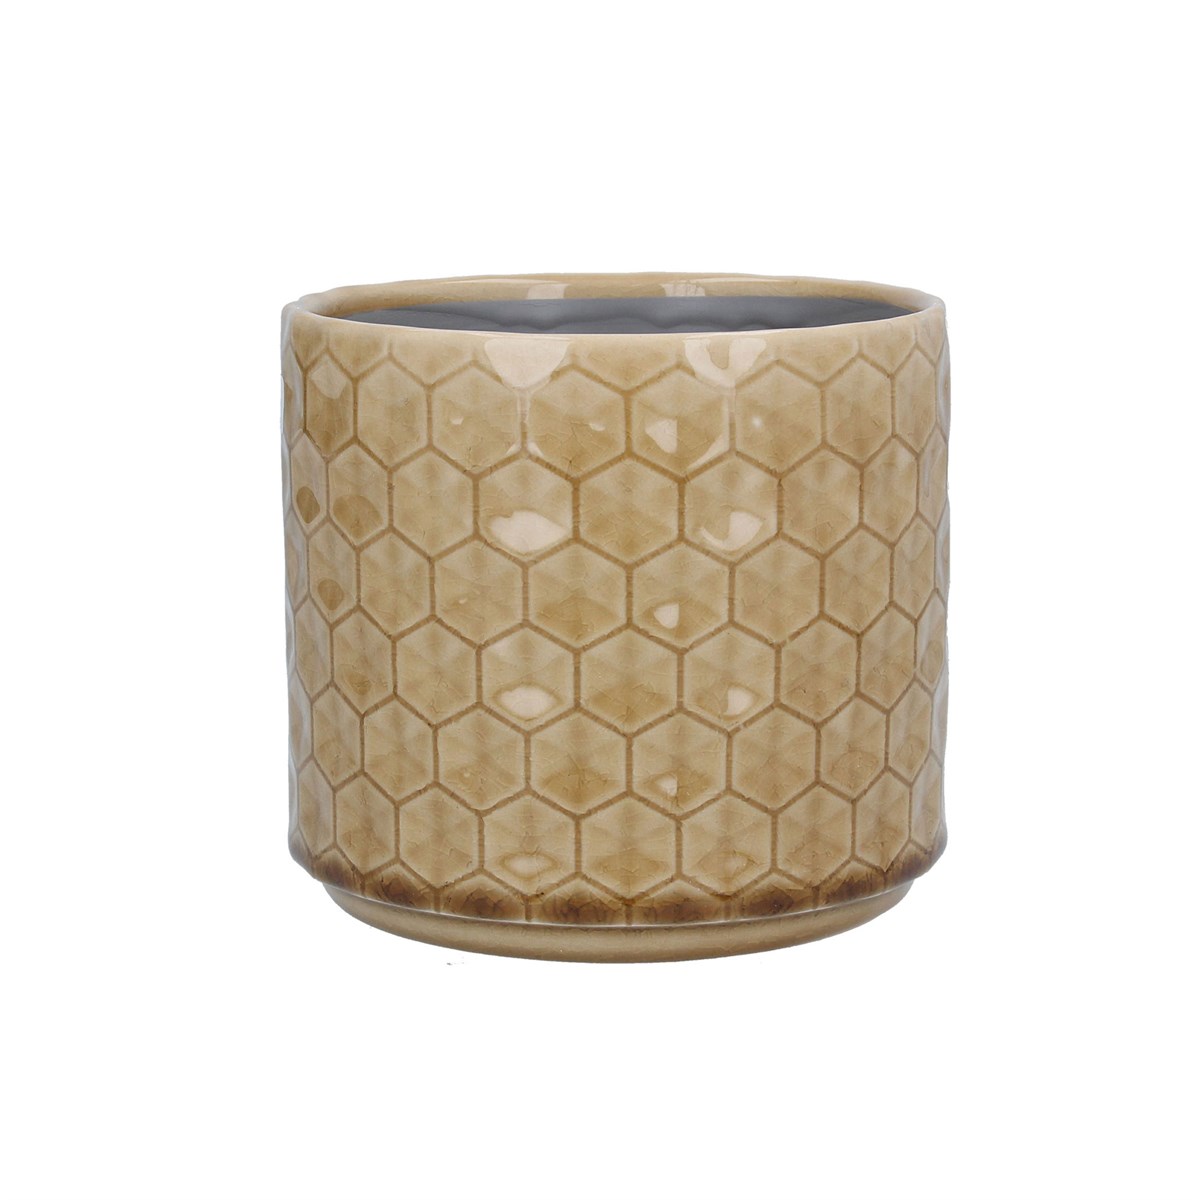 Gisela Graham Sand Honeycomb Ceramic Pot Cover, Small